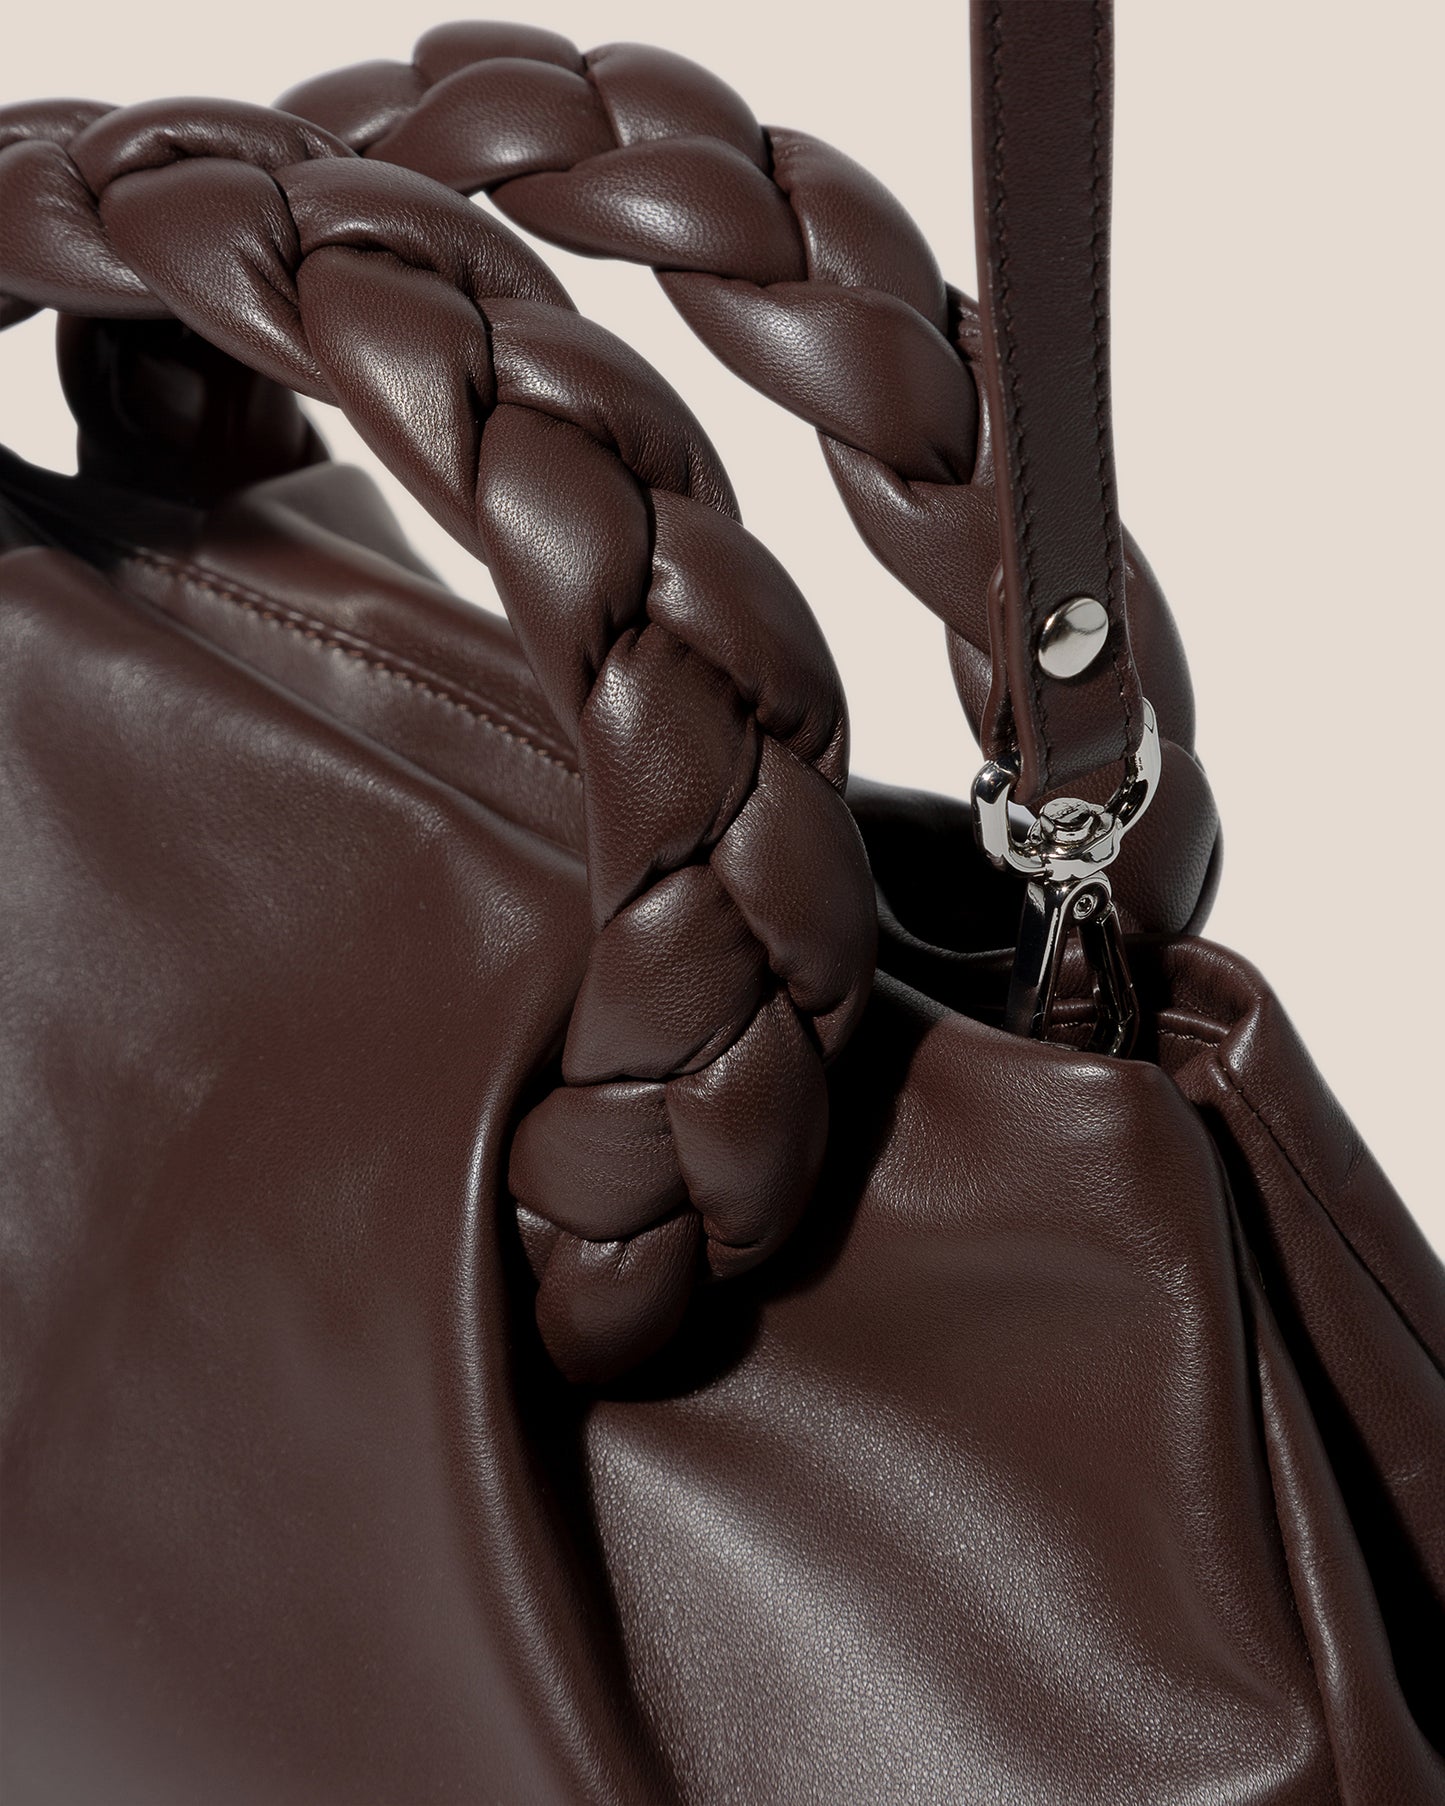 Bombon braided handle leather handbag by Hereu in 2023